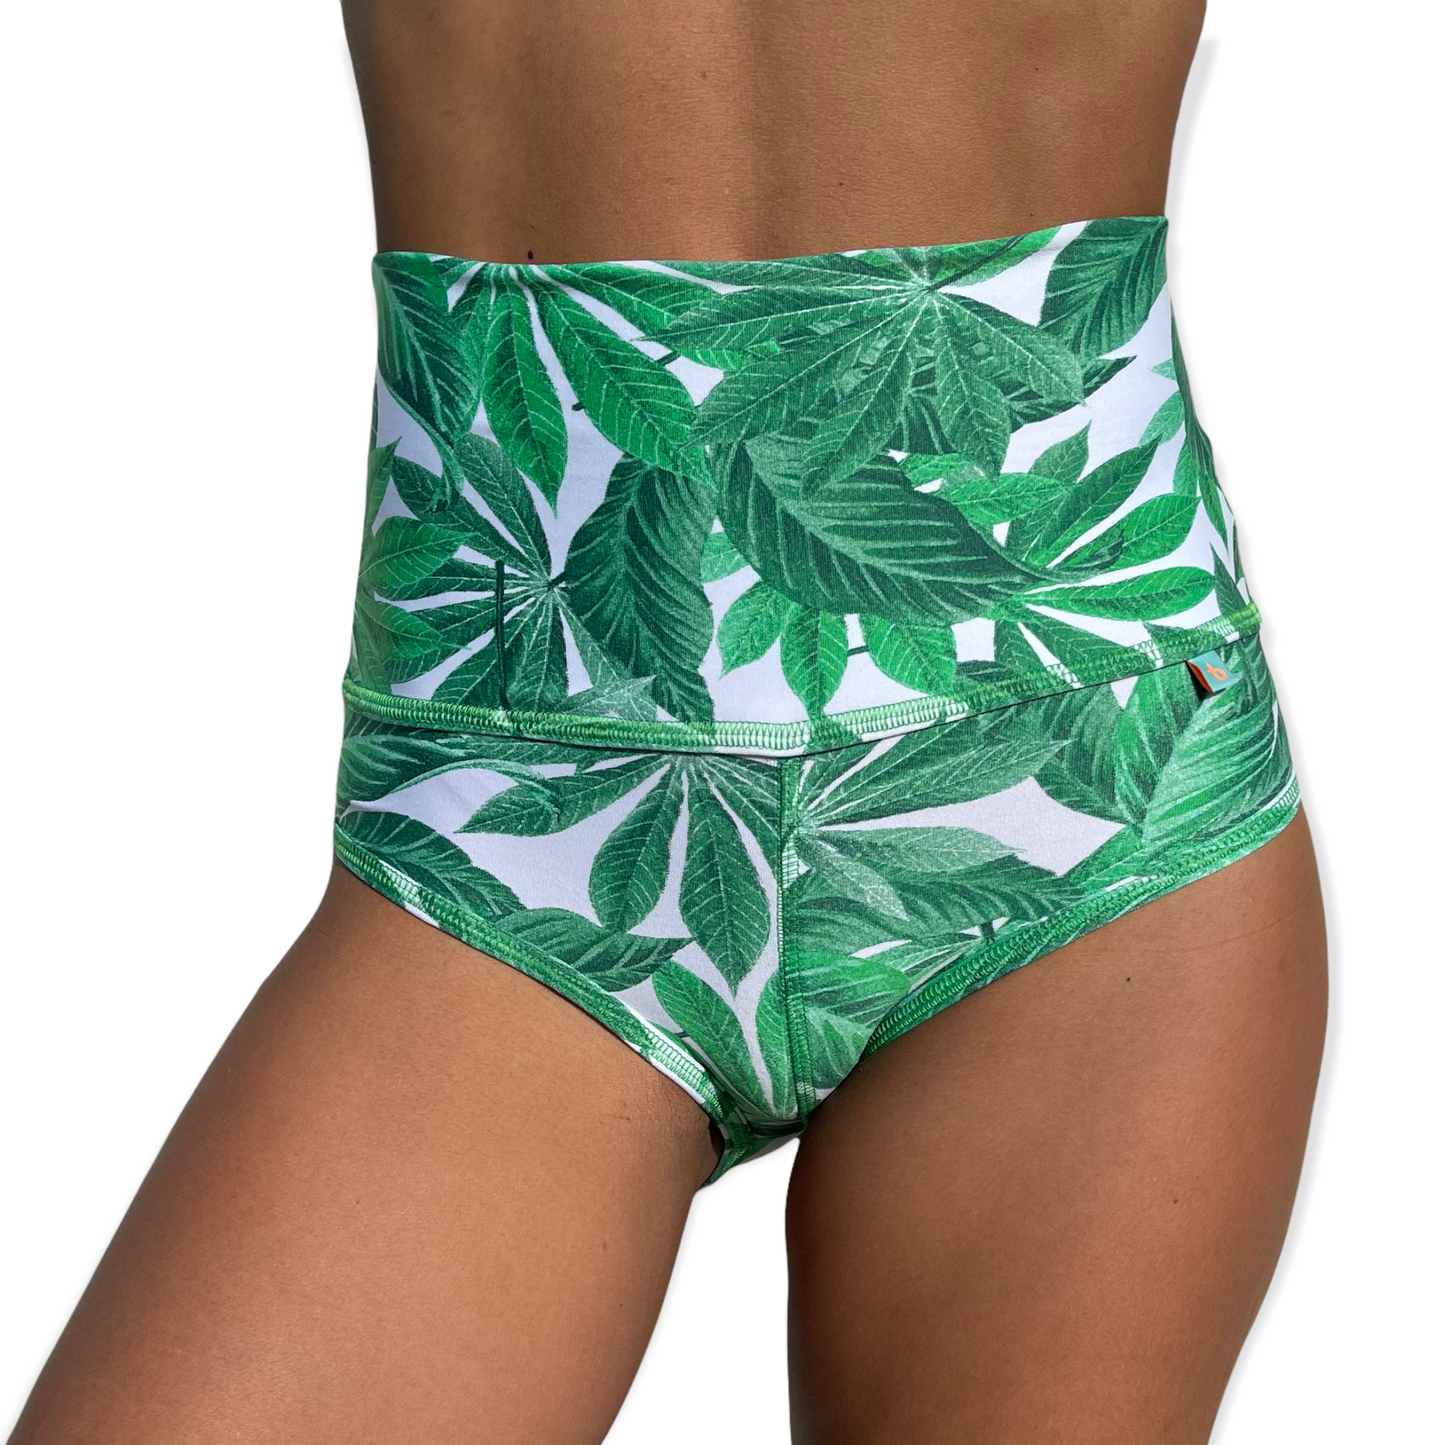 Green and white floral print high waist shorts for Bikram Hot Yoga